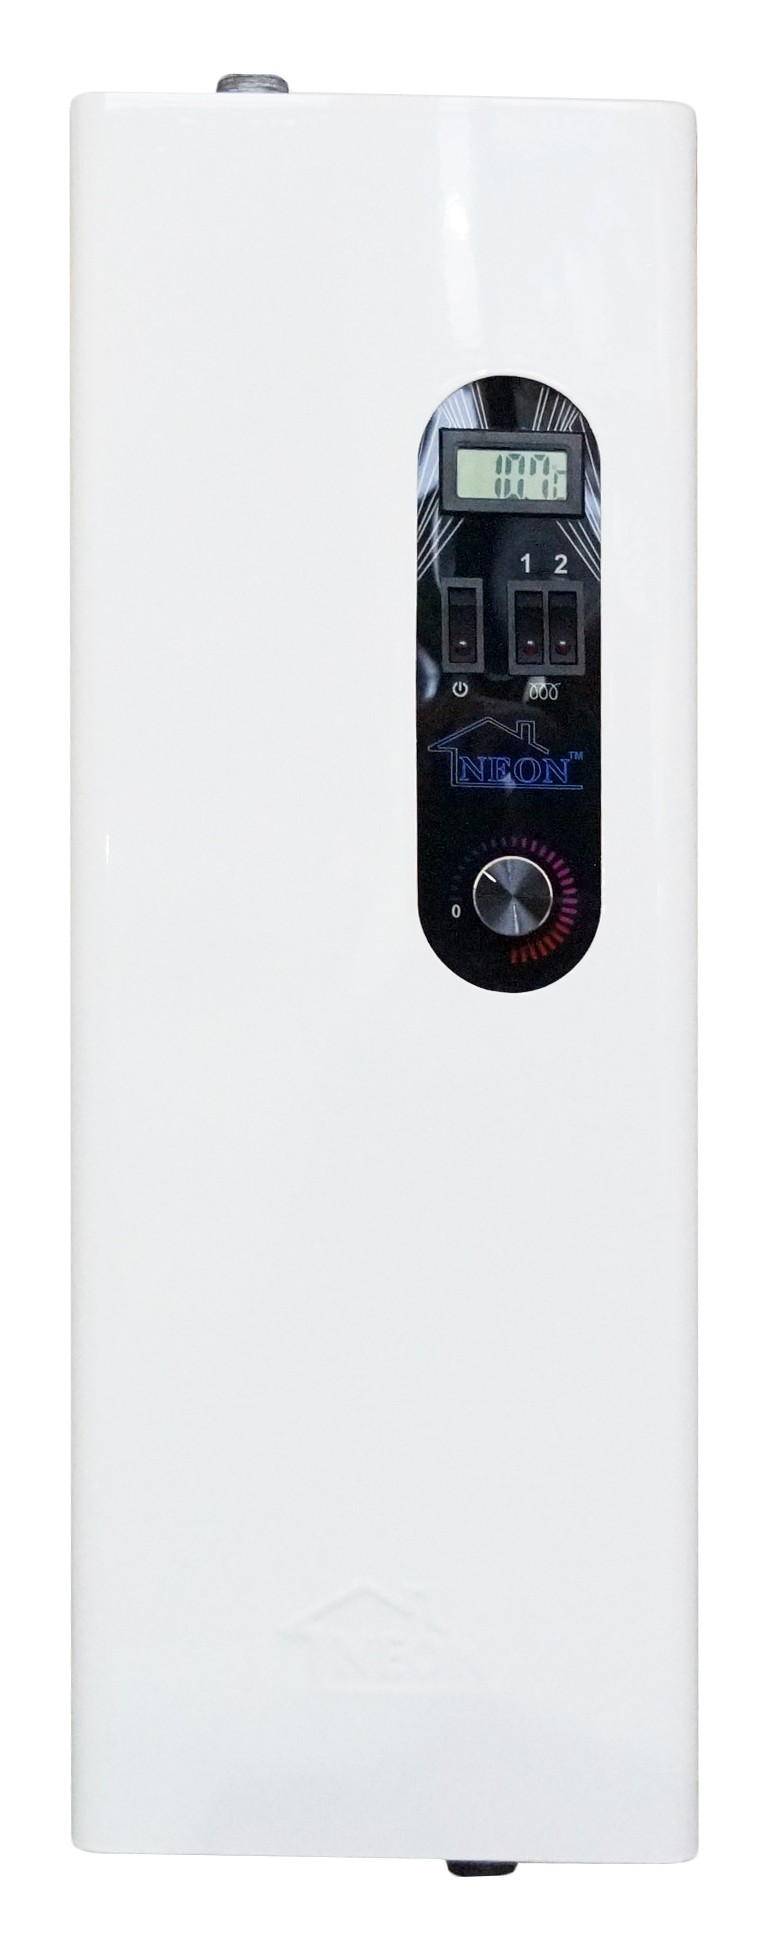 Электрический котел Neon Classik 9 кВТ 220V (WCS-9-220МП) в интернет-магазине, главное фото